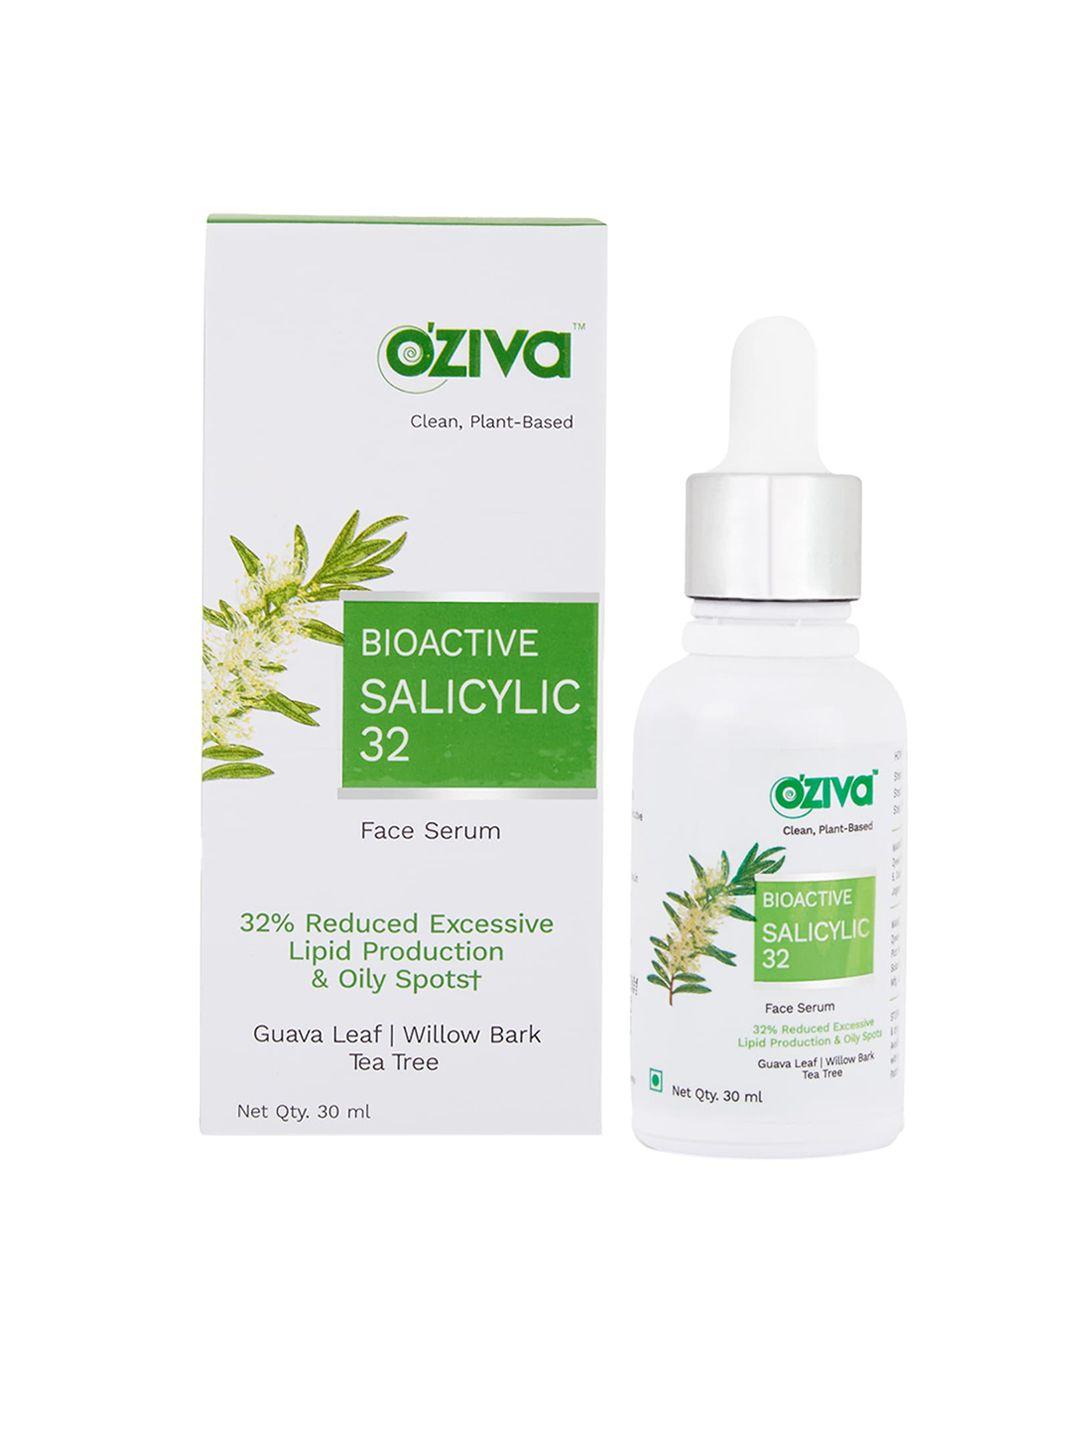 oziva bioactive salicylic32 face serum 30ml